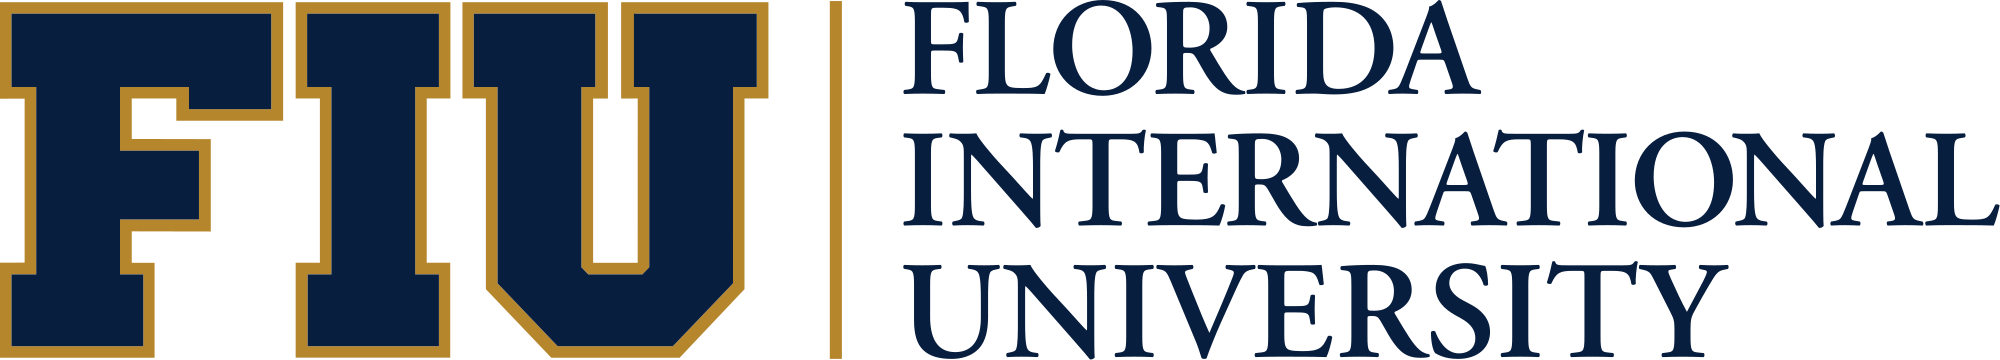 Florida International University Logo - File:Florida International University logo.svg - Wikimedia Commons